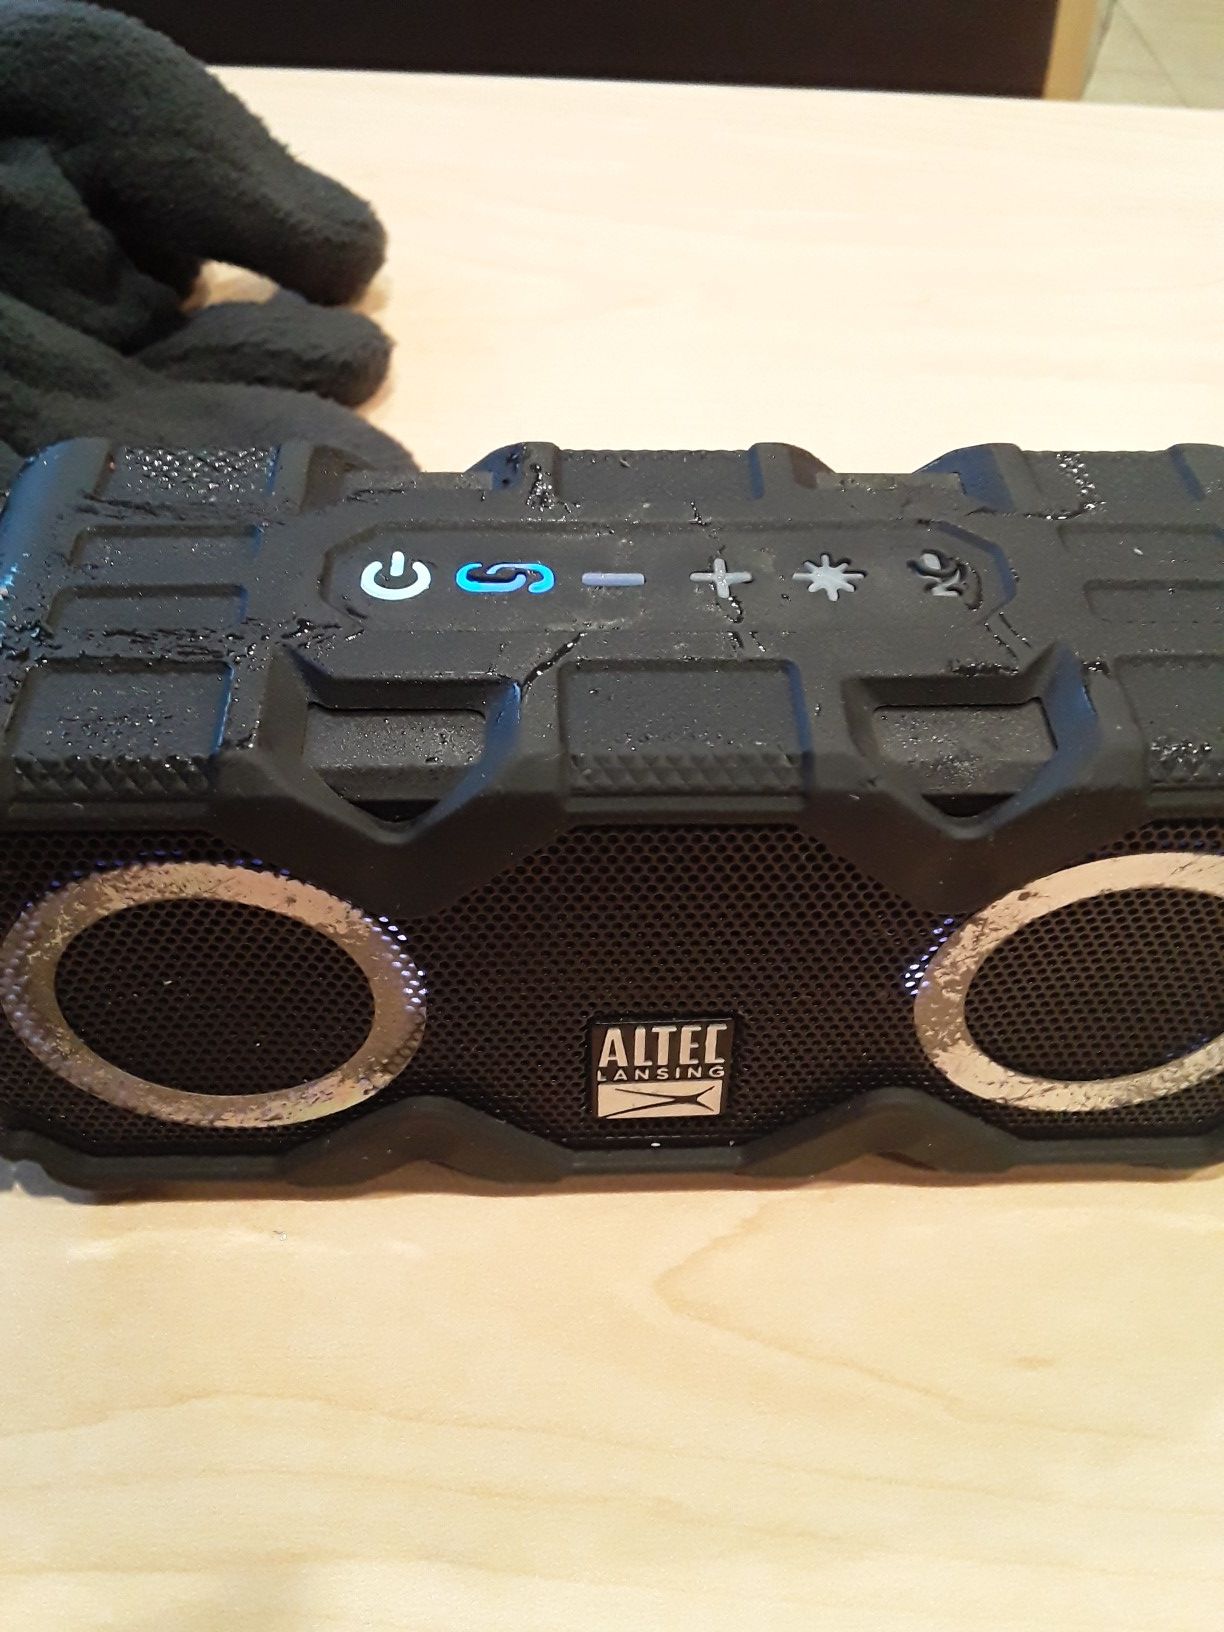 Altec bluetooth speaker n charger